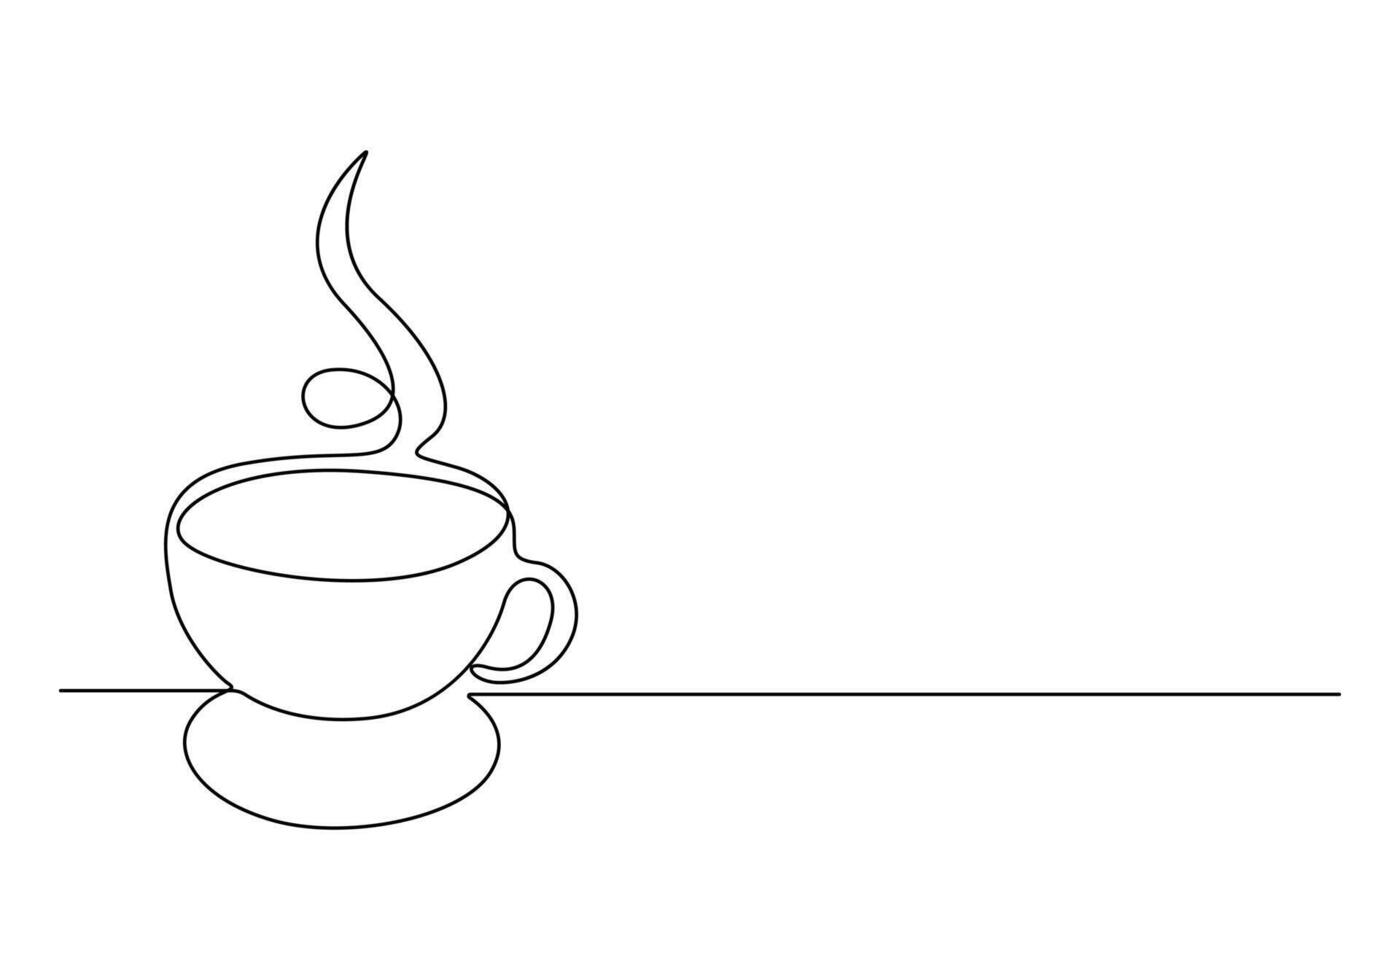 café o té taza uno continuo línea dibujo caliente bebida con vapor vector ilustración